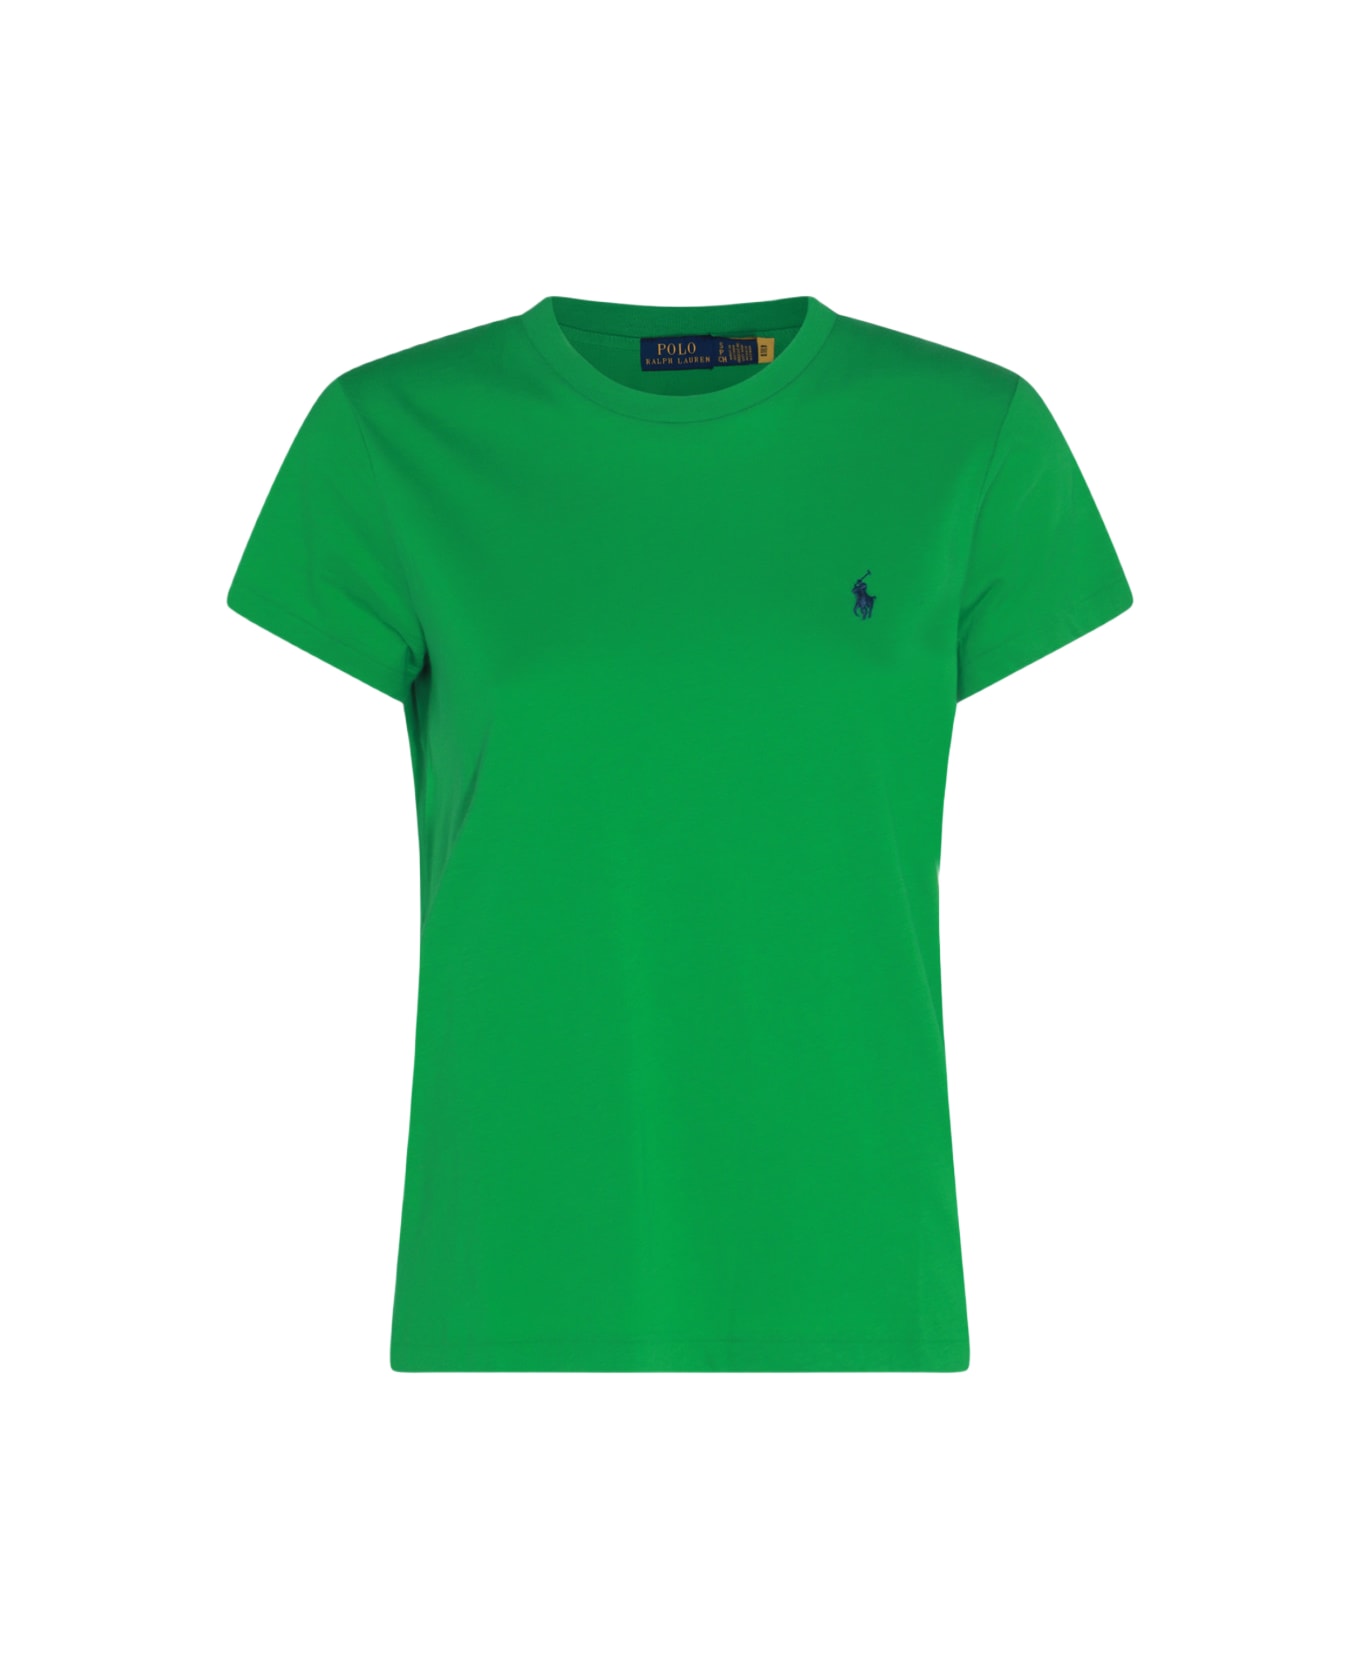 Polo Ralph Lauren Green And Blue Cotton T-shirt - PREPPY GREEN